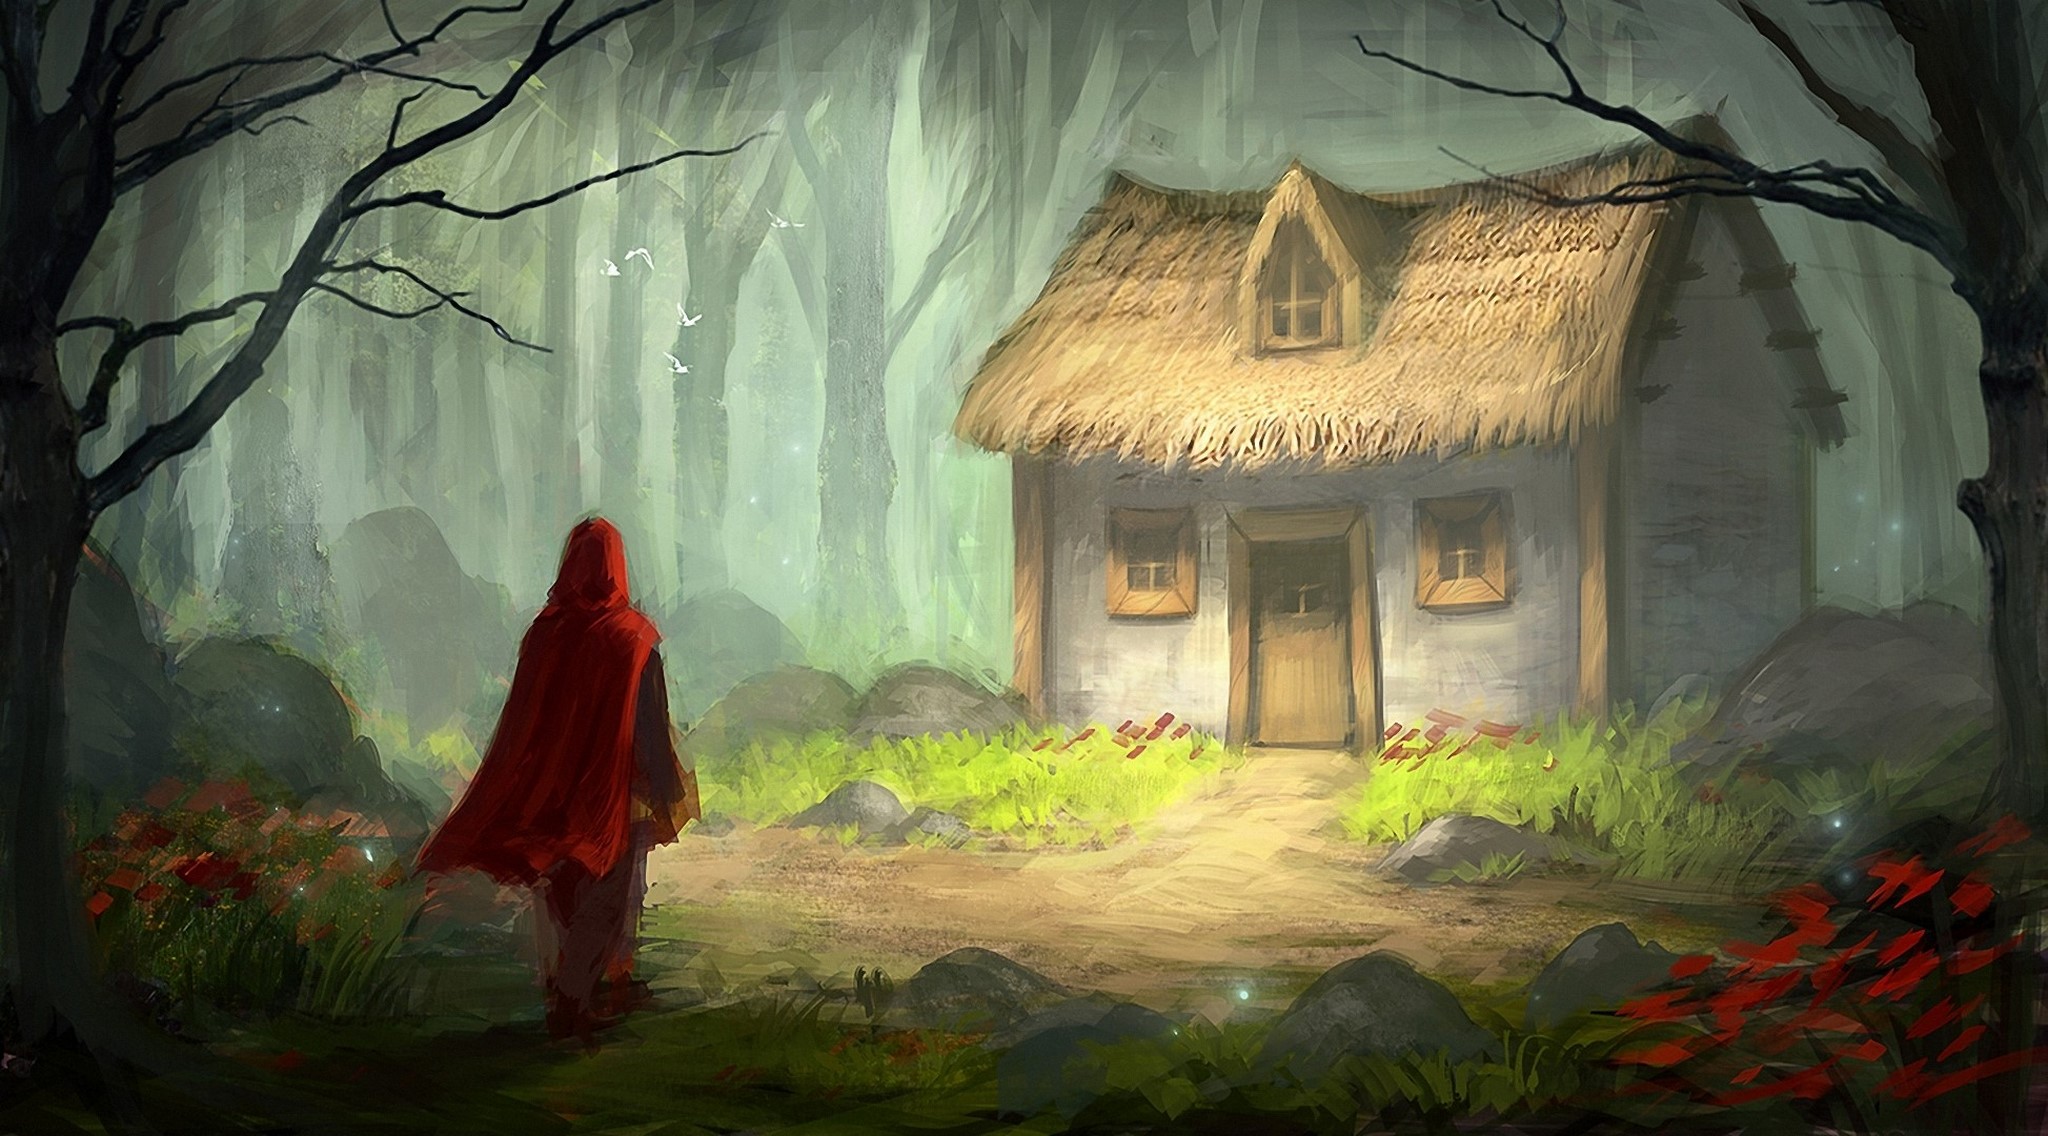 Witch cry 2 the red hood. Литтл Хэнглтон. Fairy Tale красная шапочка. Сказочный домик в лесу. Домик в лесу арт.